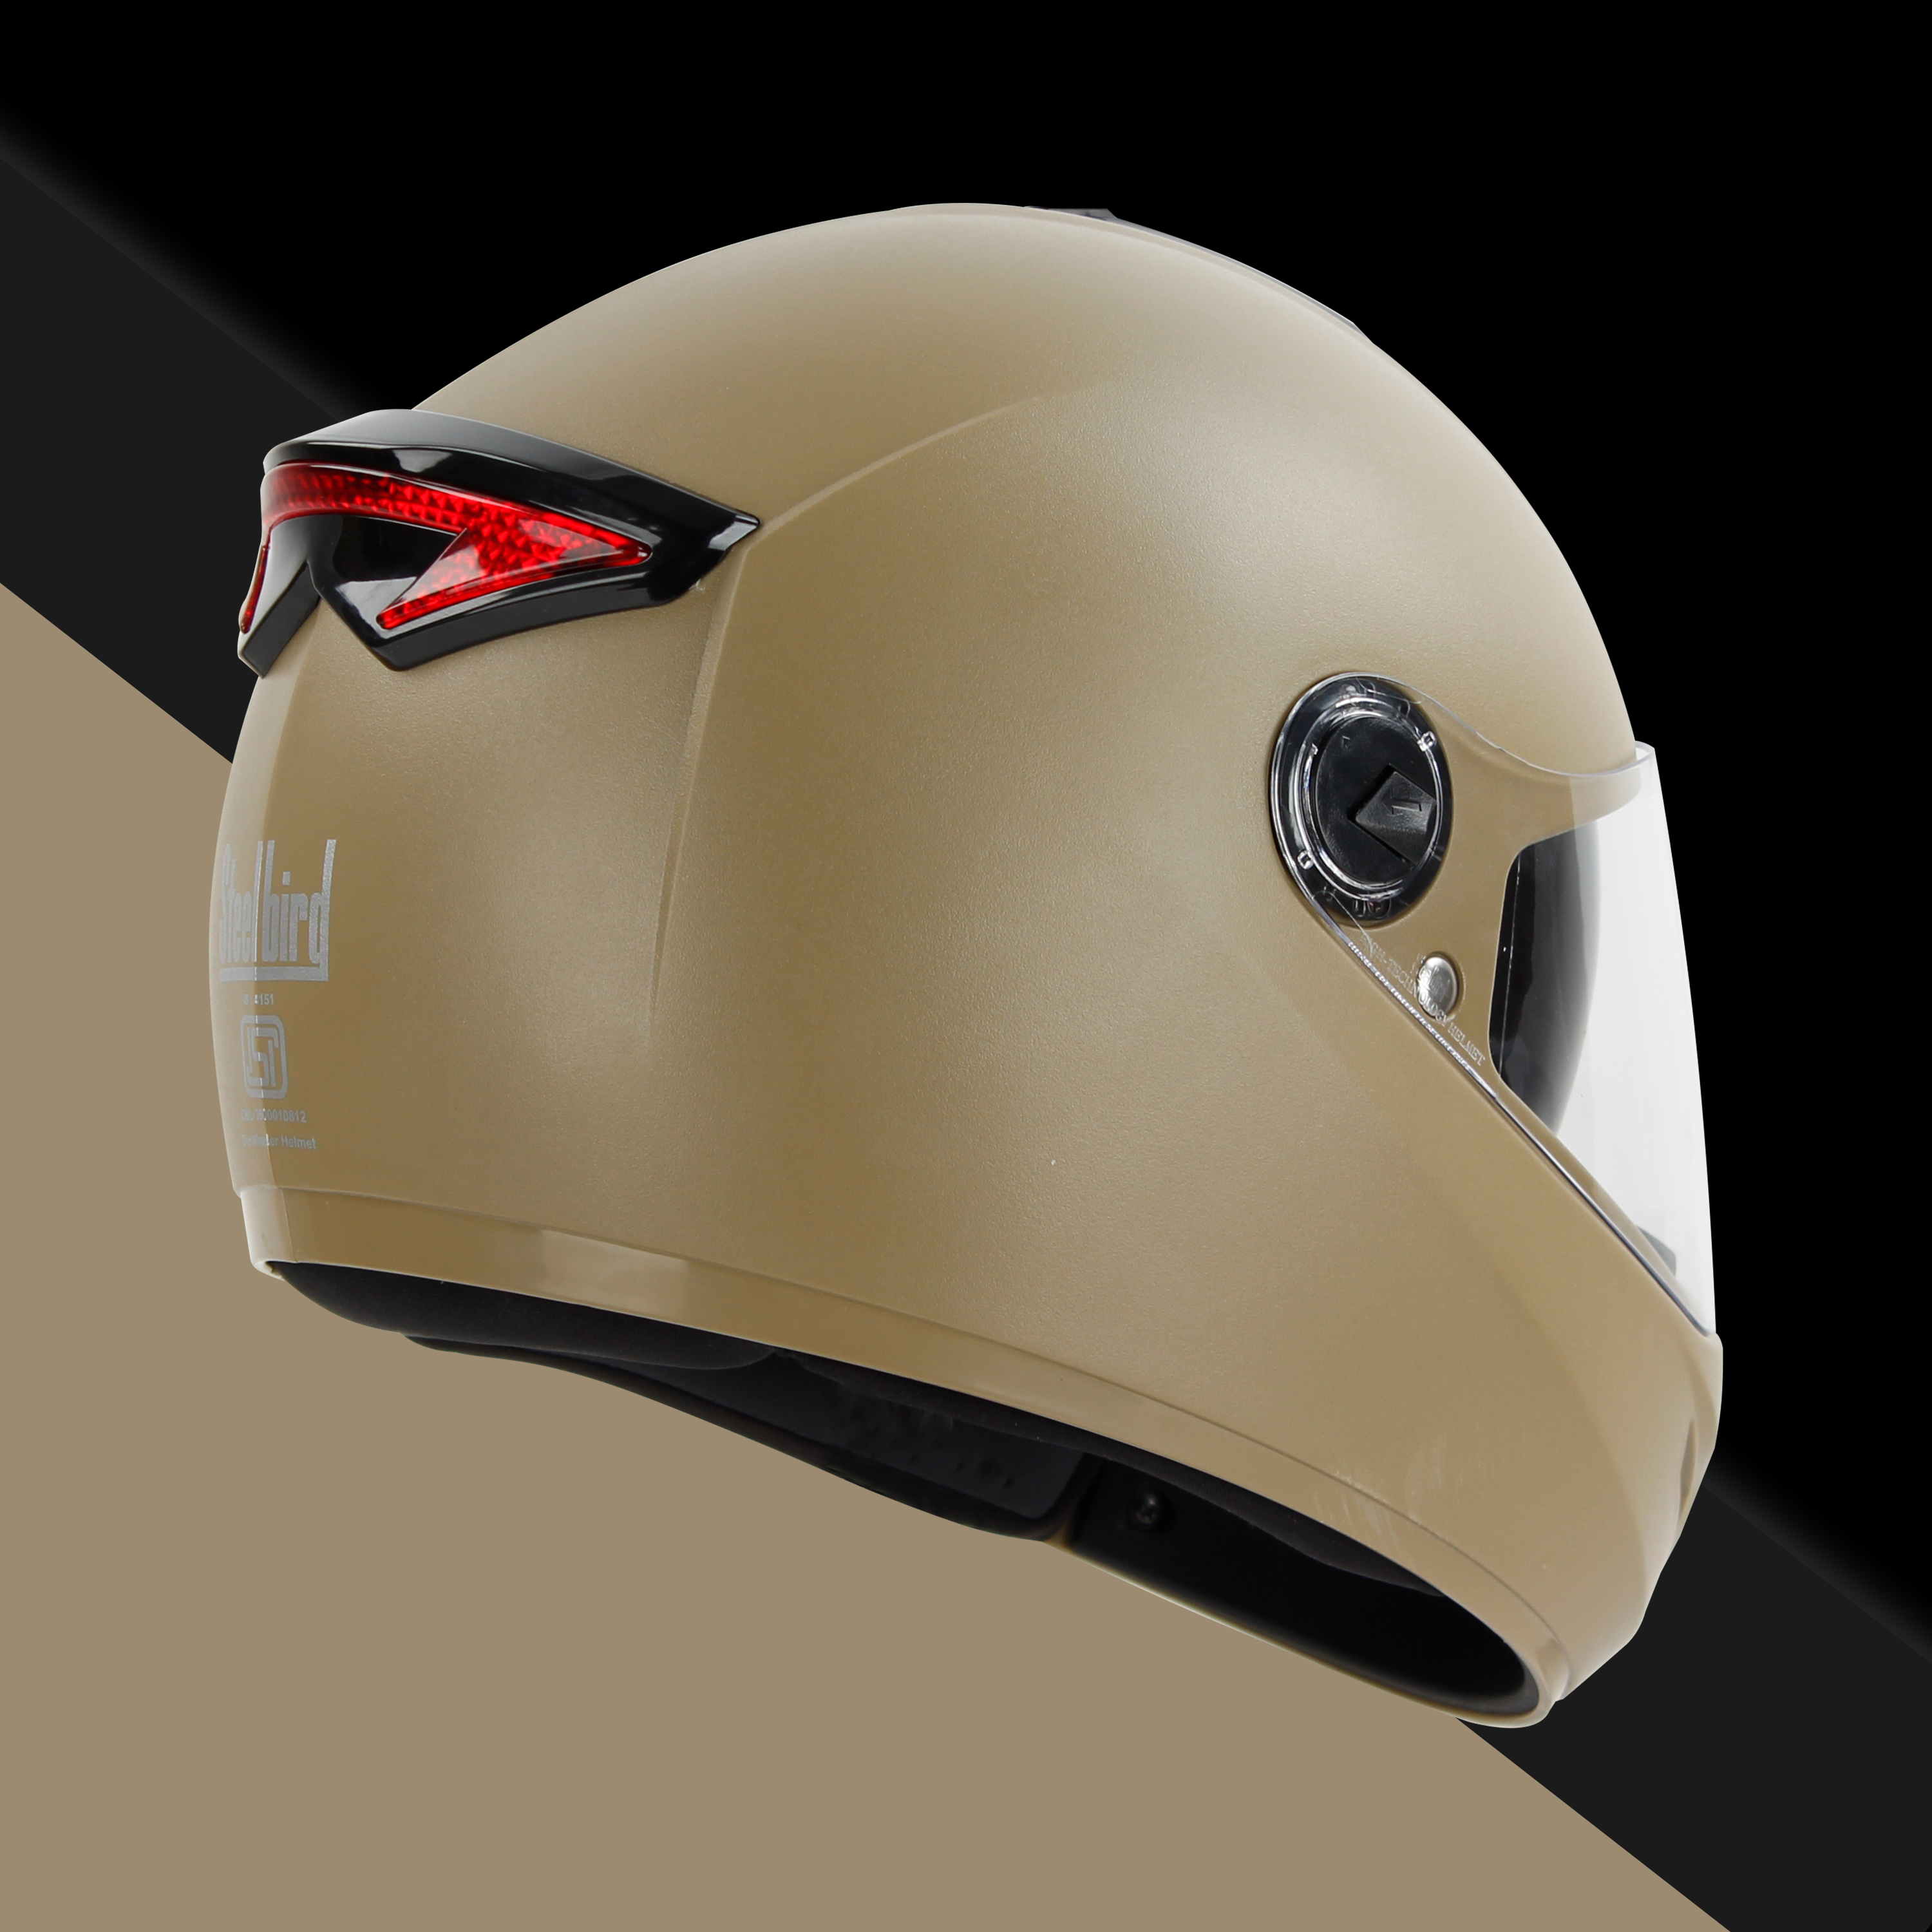 Steelbird SBH-34 Road ISI Certified Full Face Helmet With Inner Smoke Sun Shield (Dashing Desert Storm)